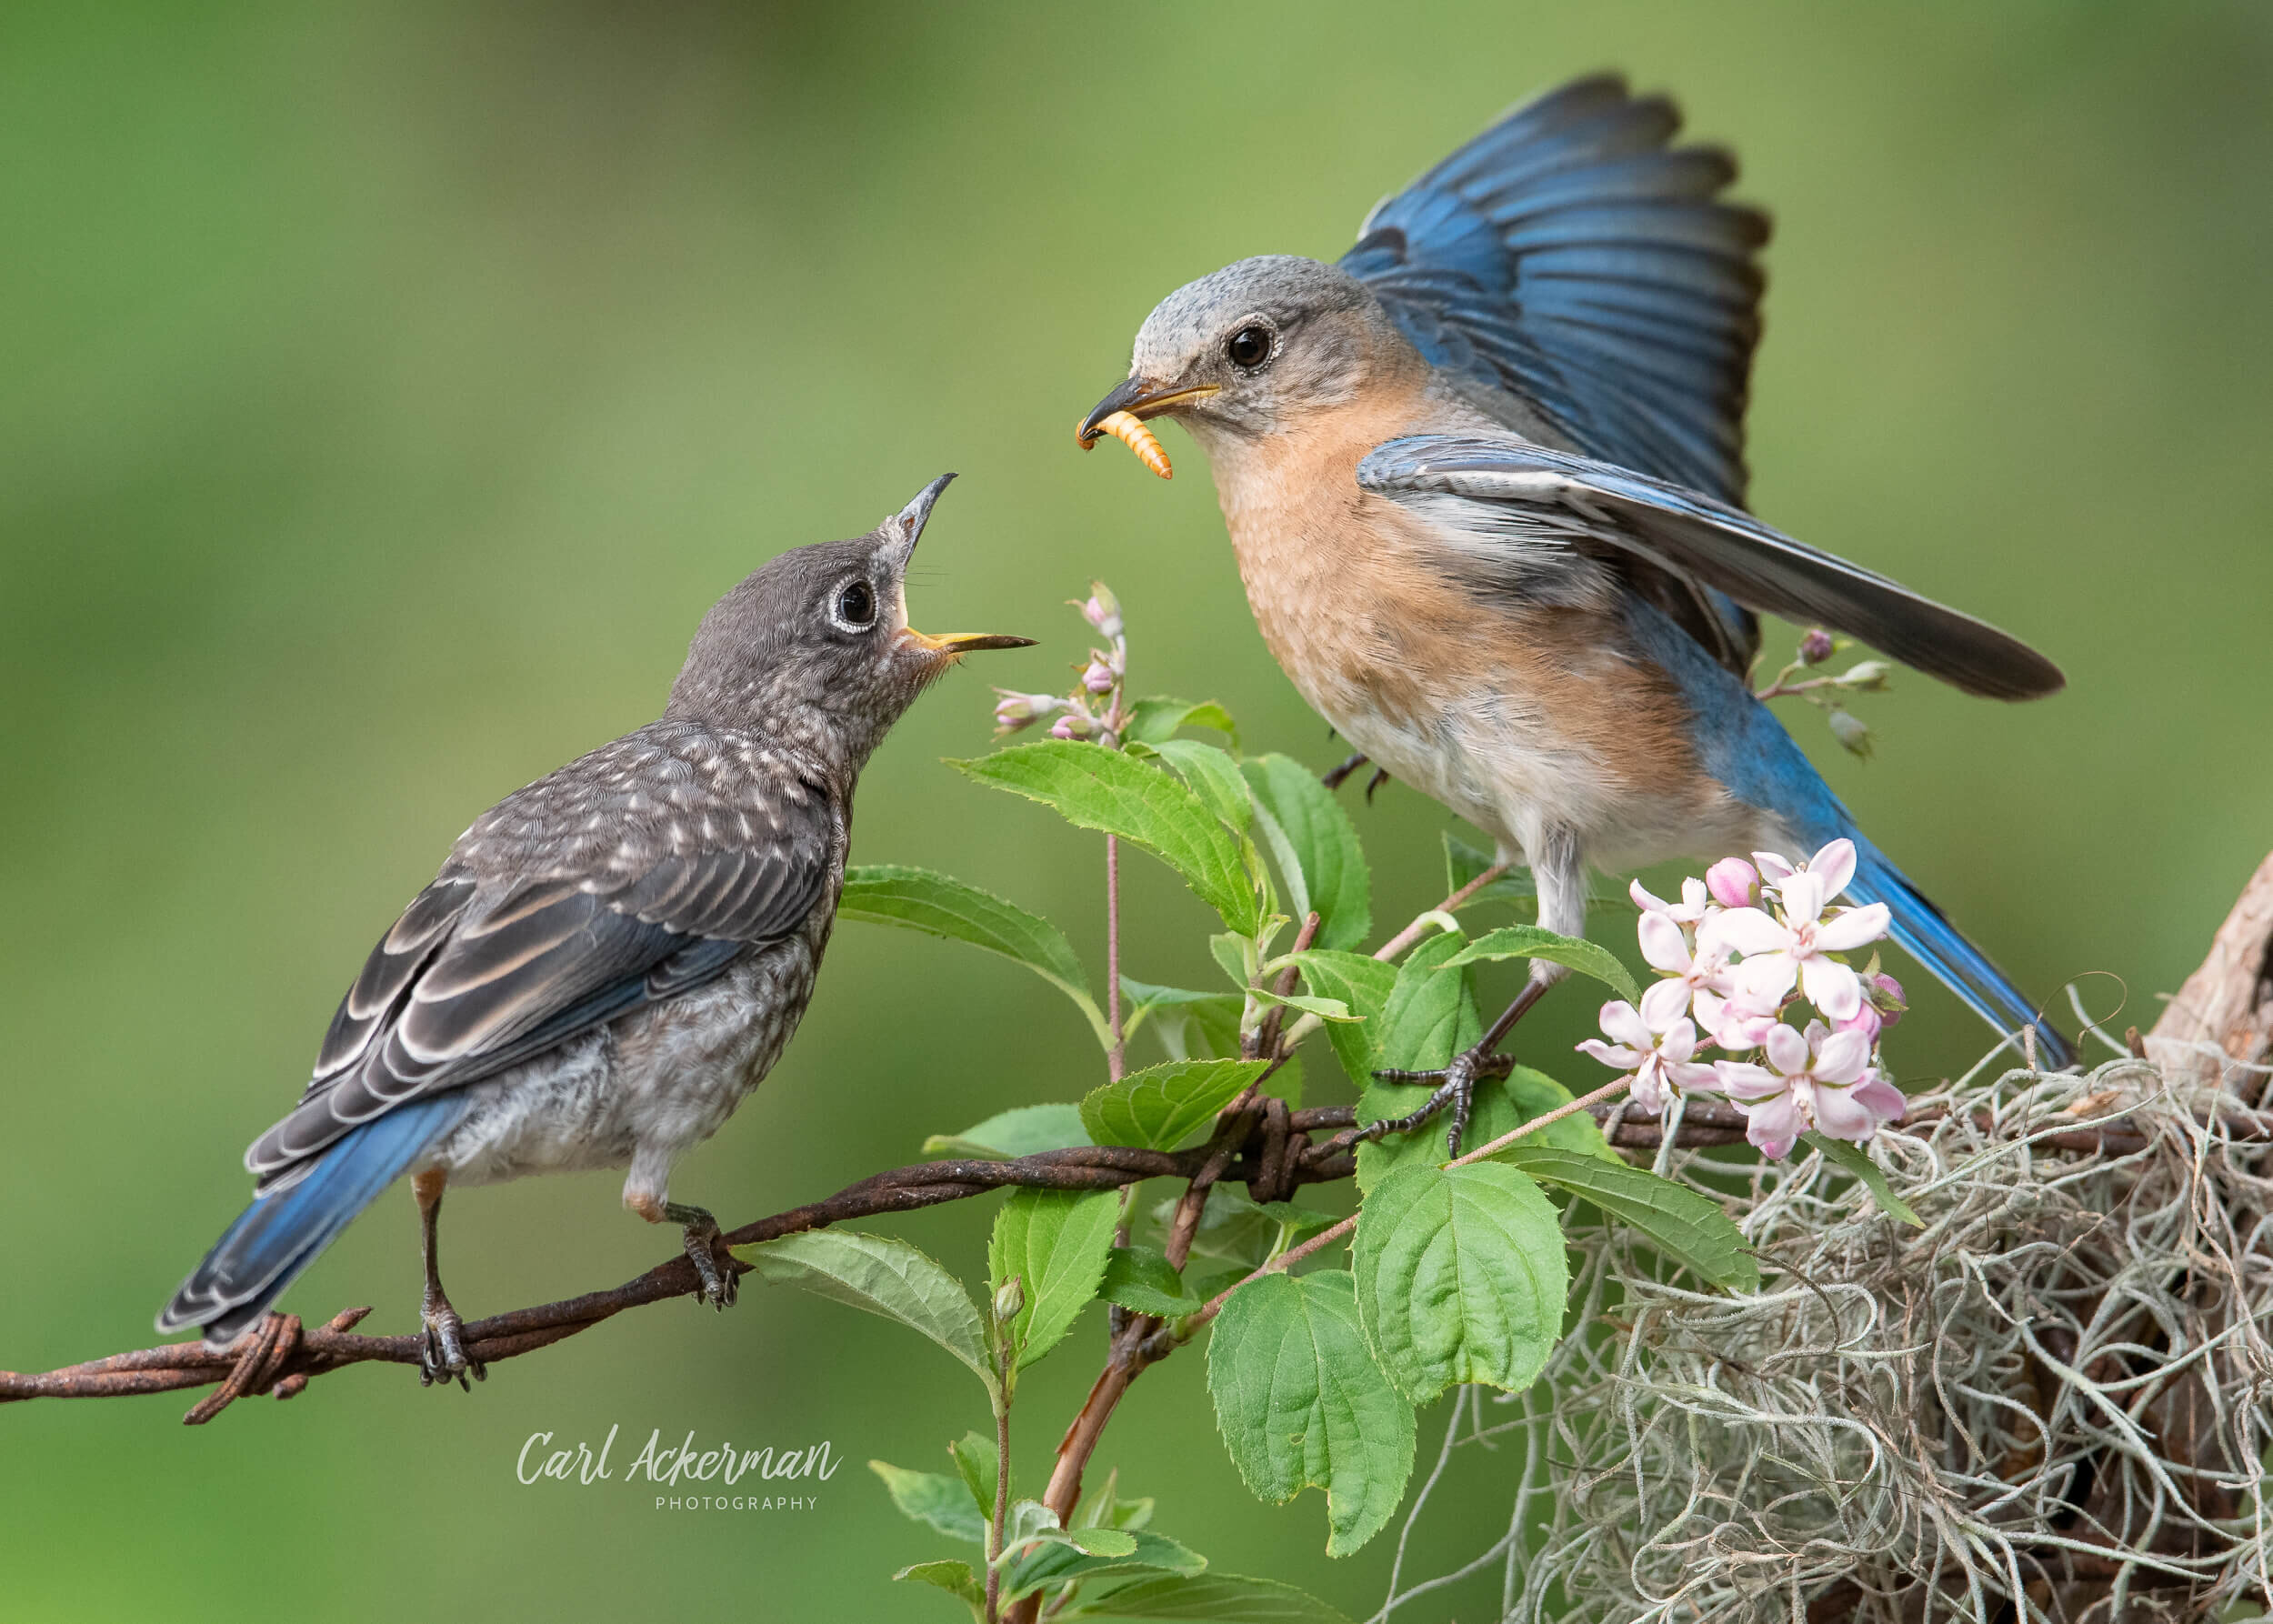 Register for Backyard Bird Photo Sessions — Carl Ackerman